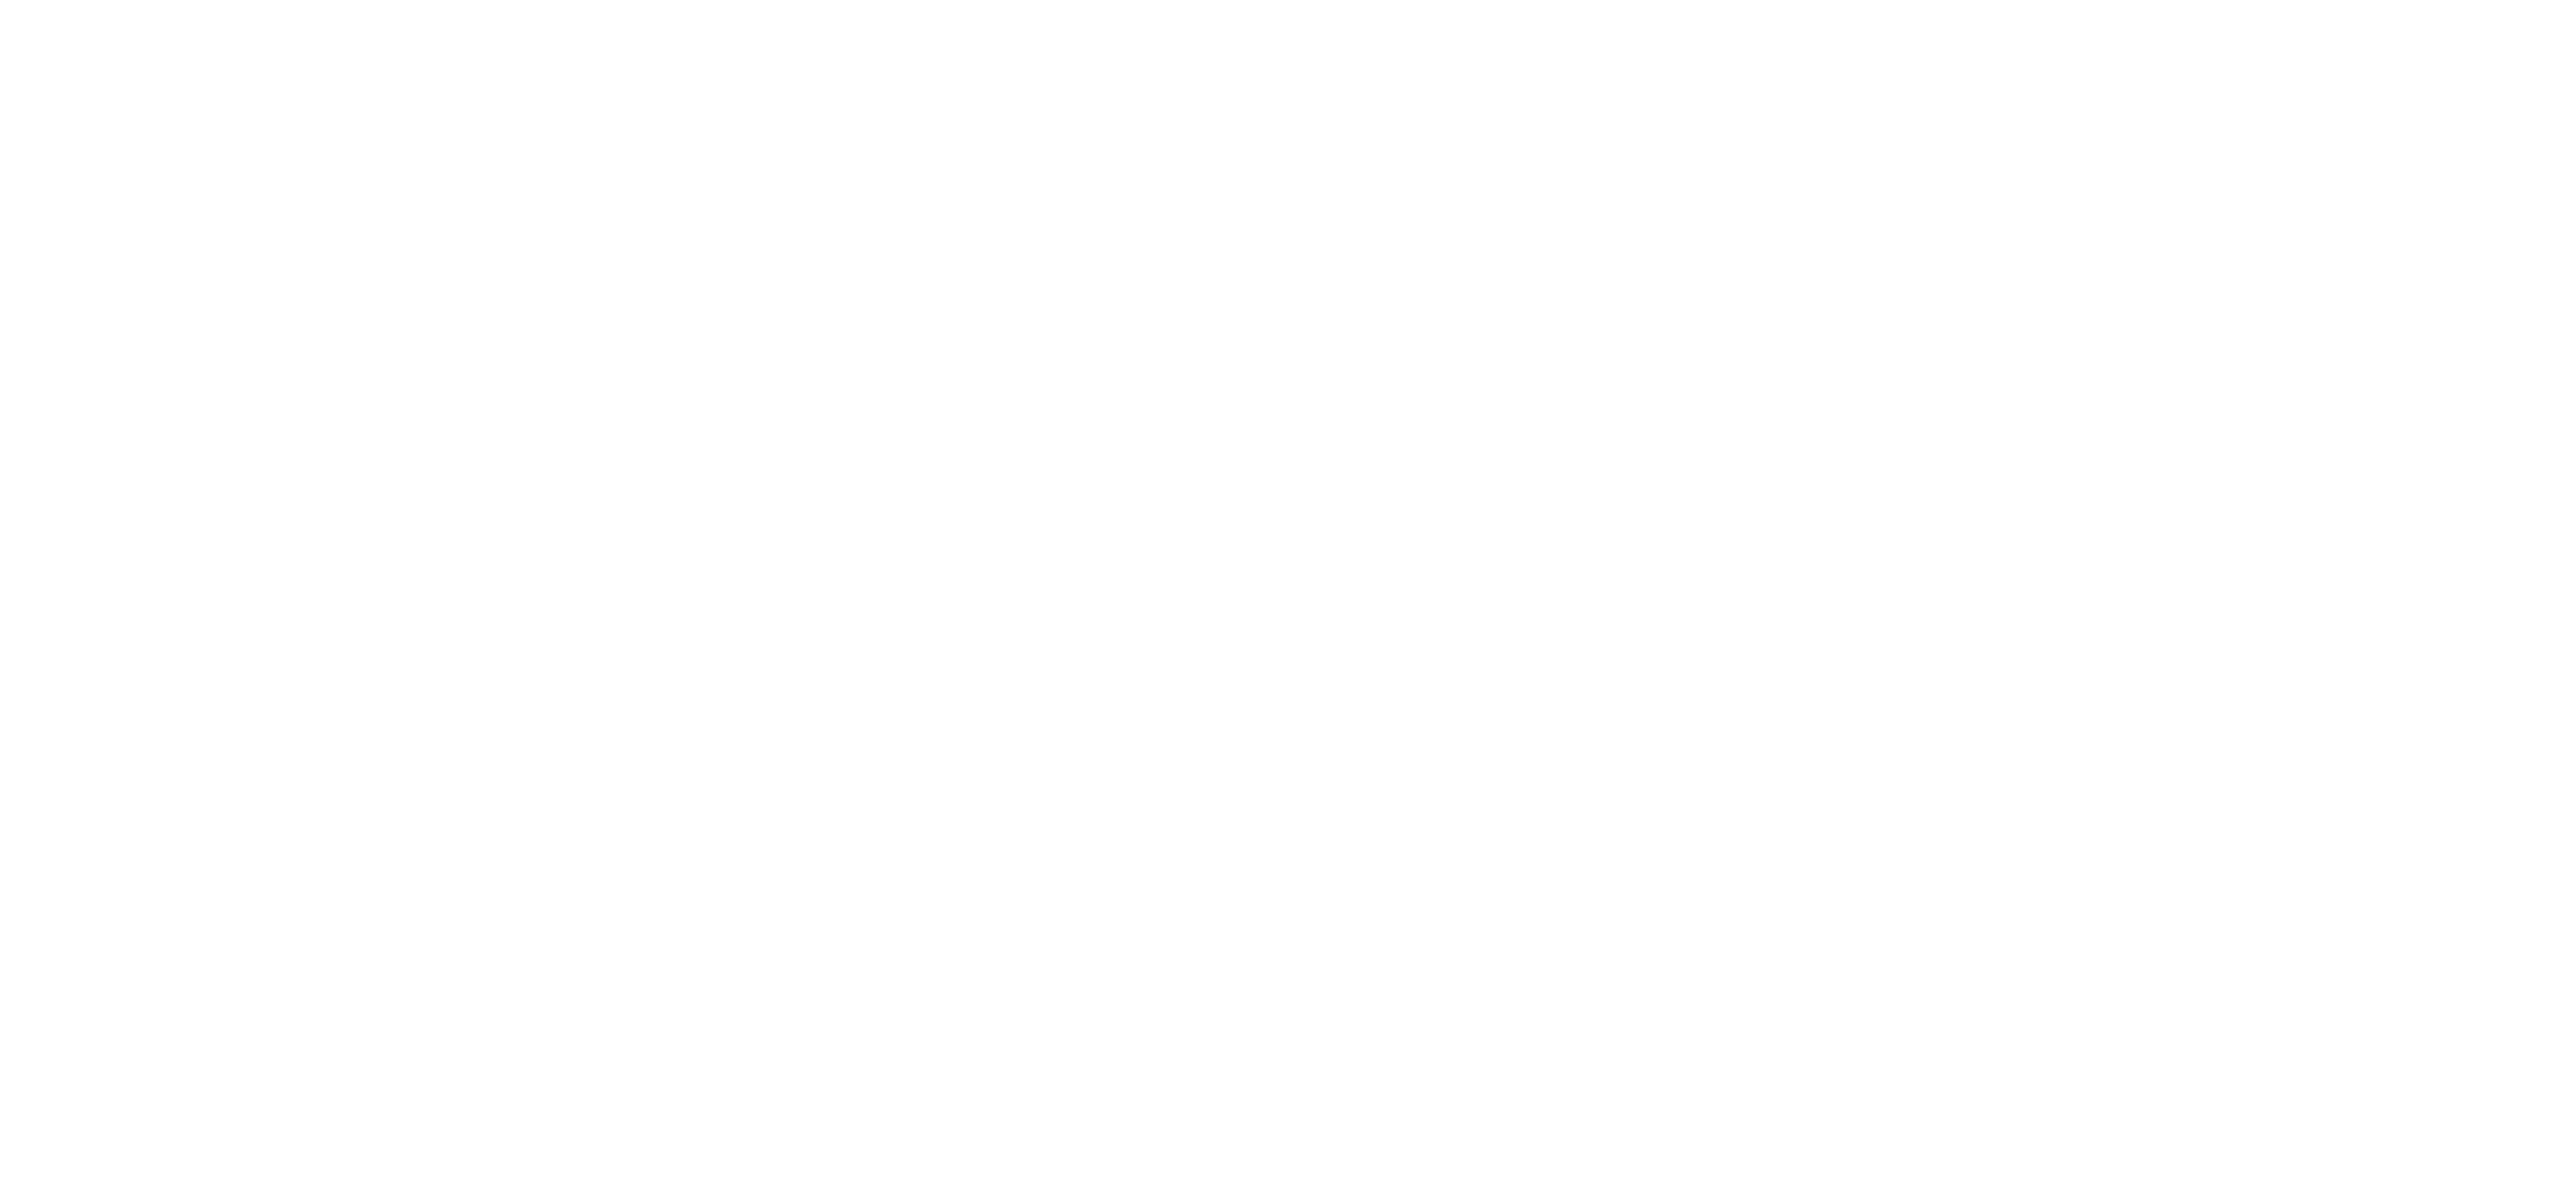 Giordano BCA